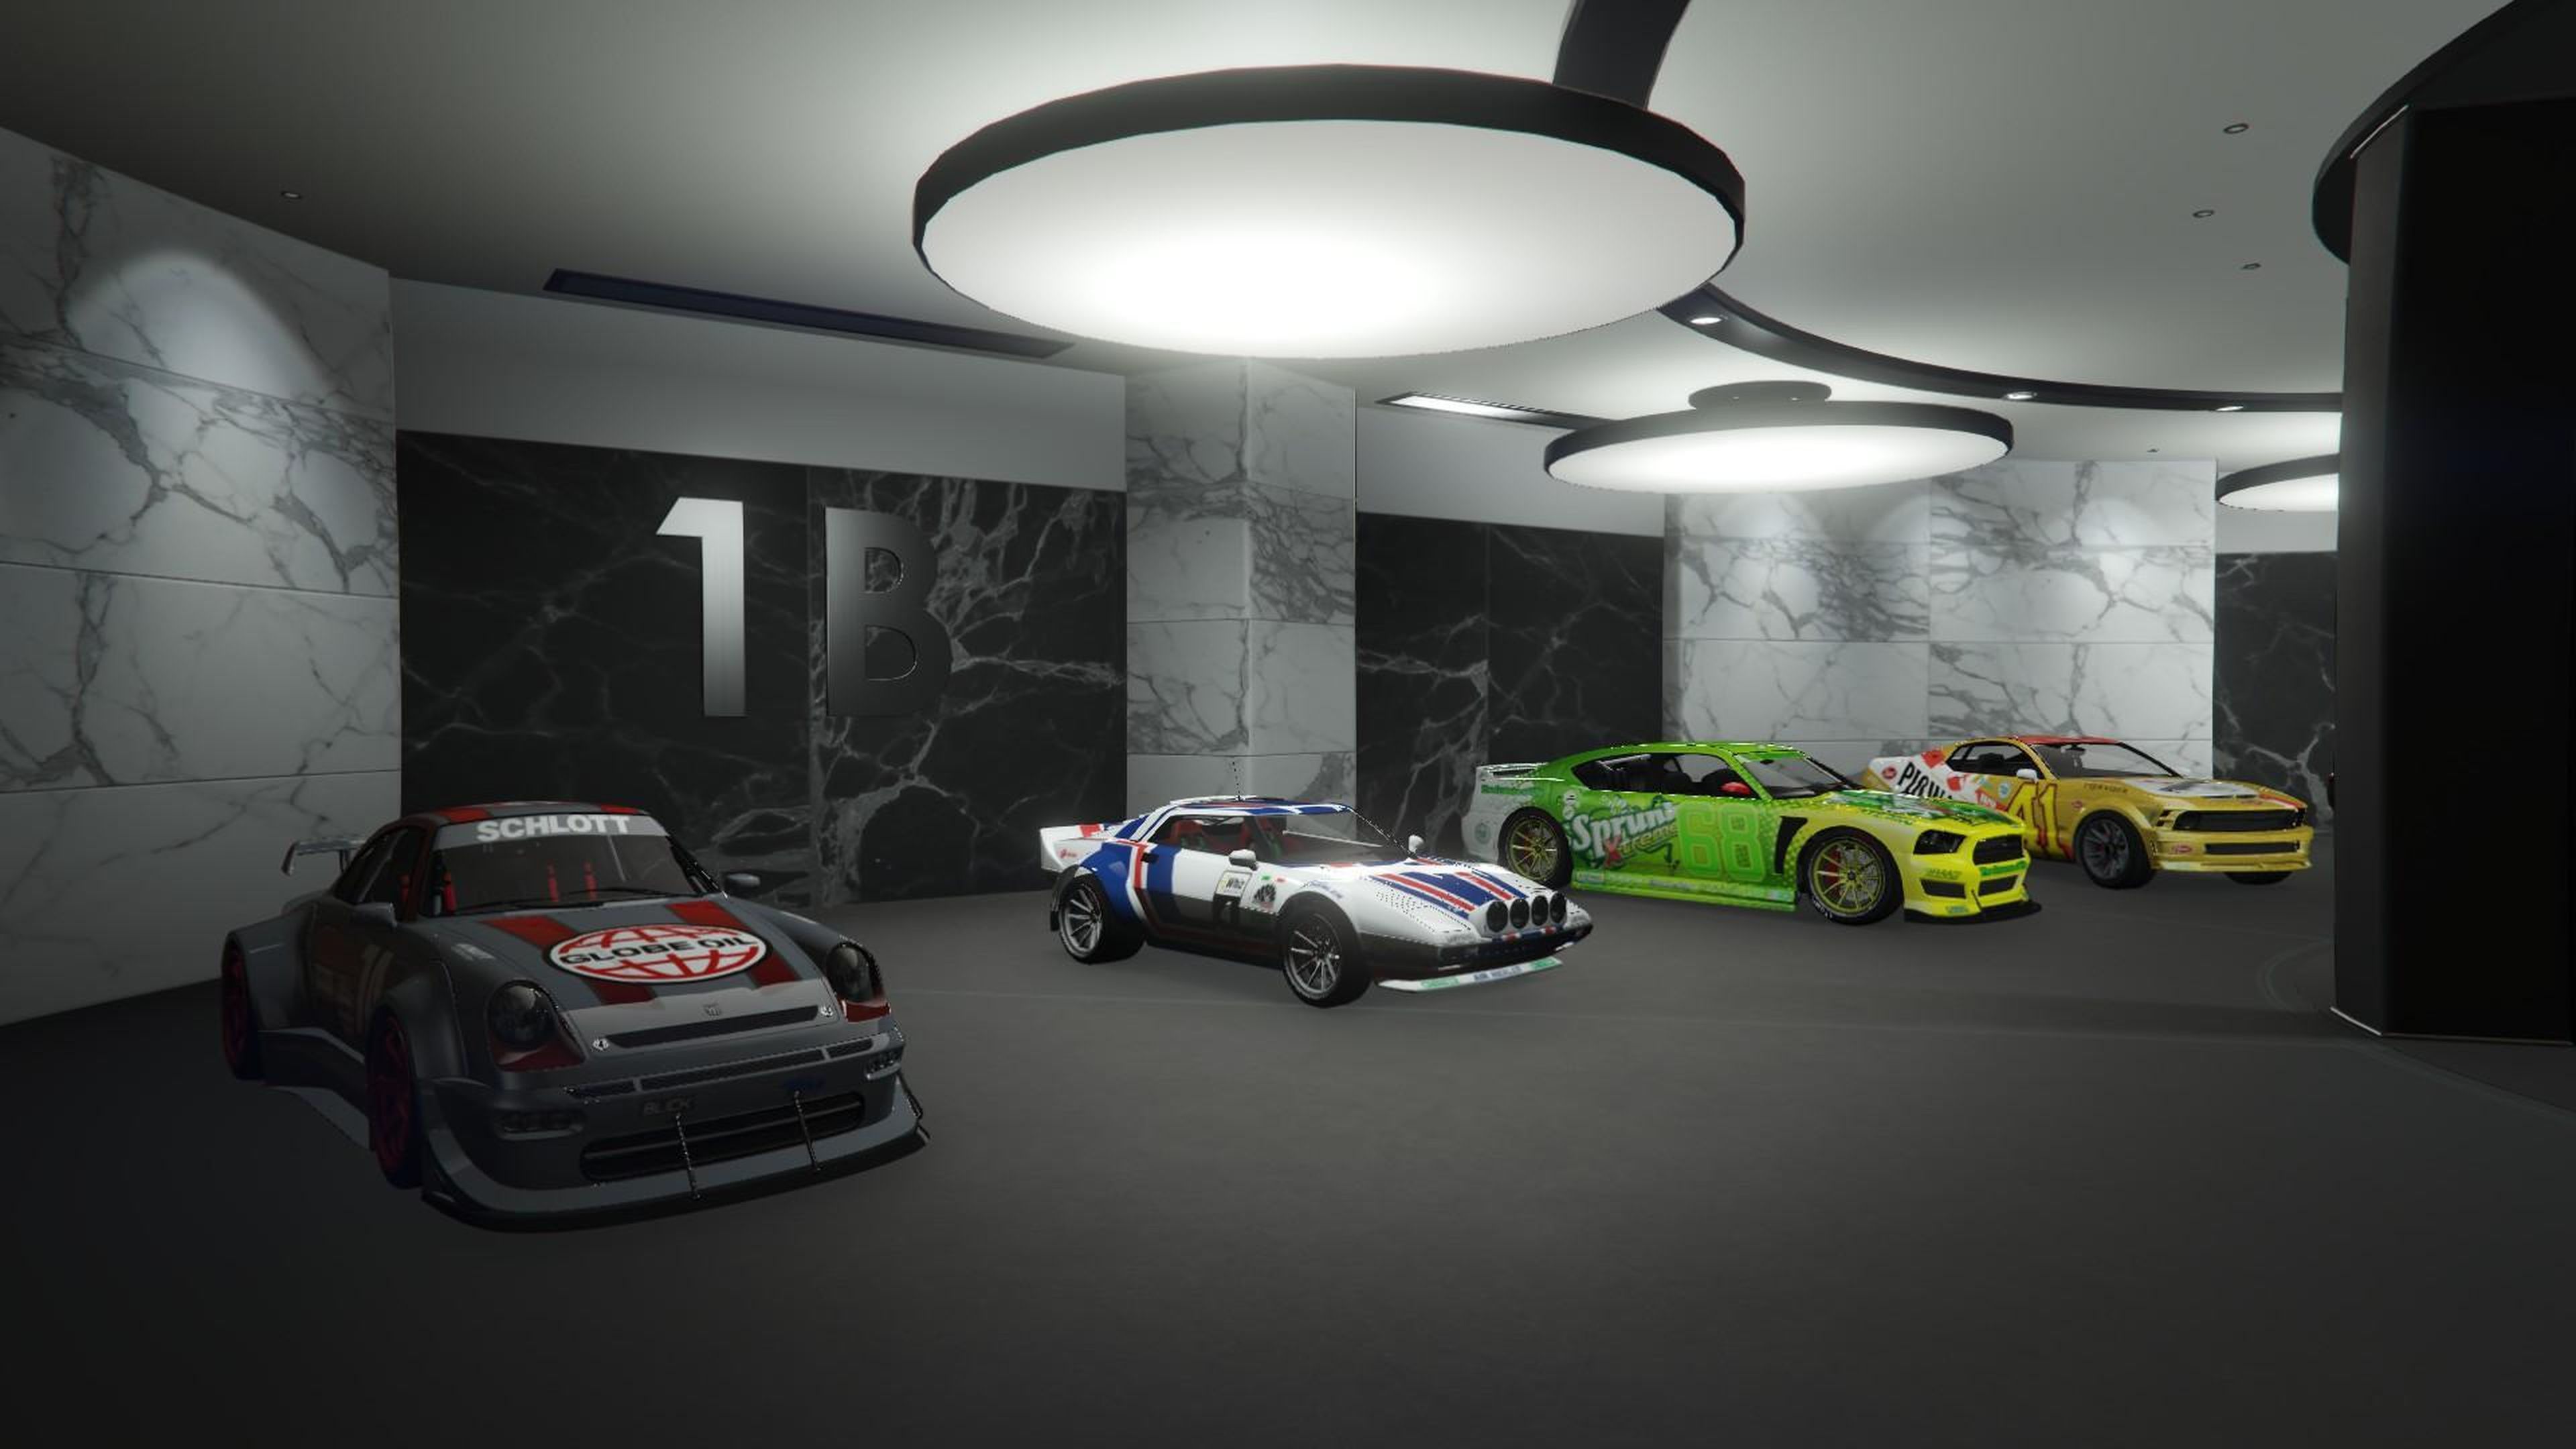 Гта 5 игра гаражи. GTA 5 гараж. GTA 5 Garage. Машины в гараже ГТА 5.